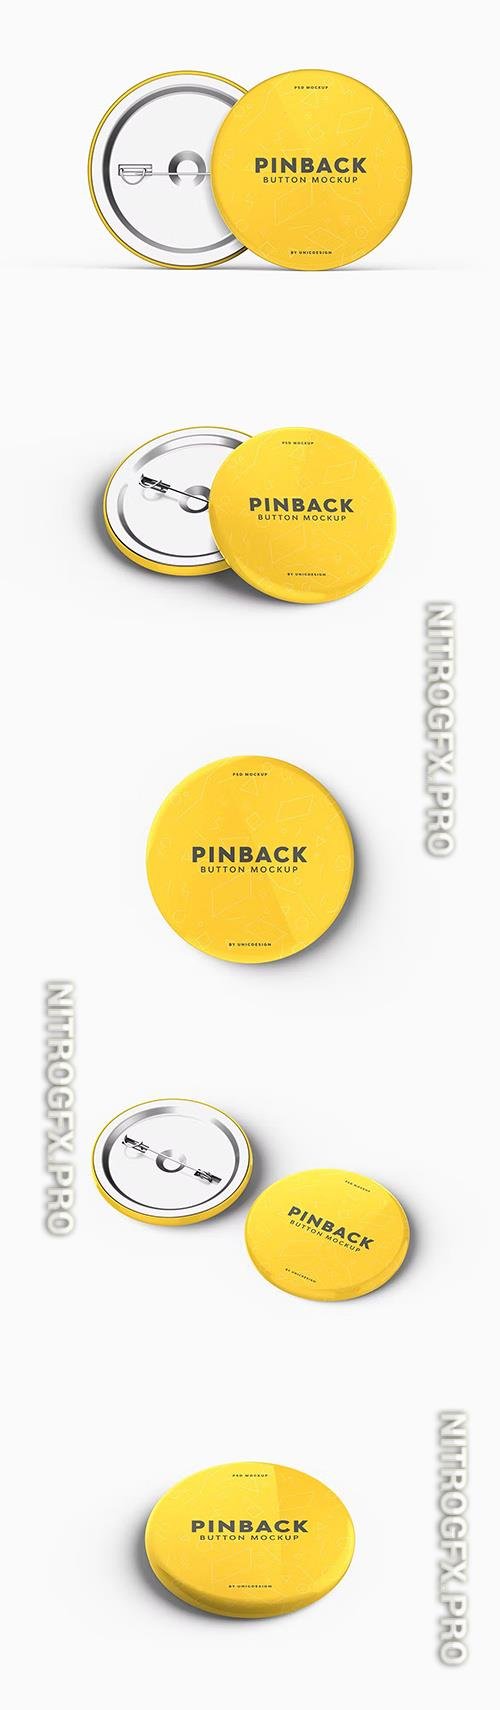 Pinback Button Mockup PSD